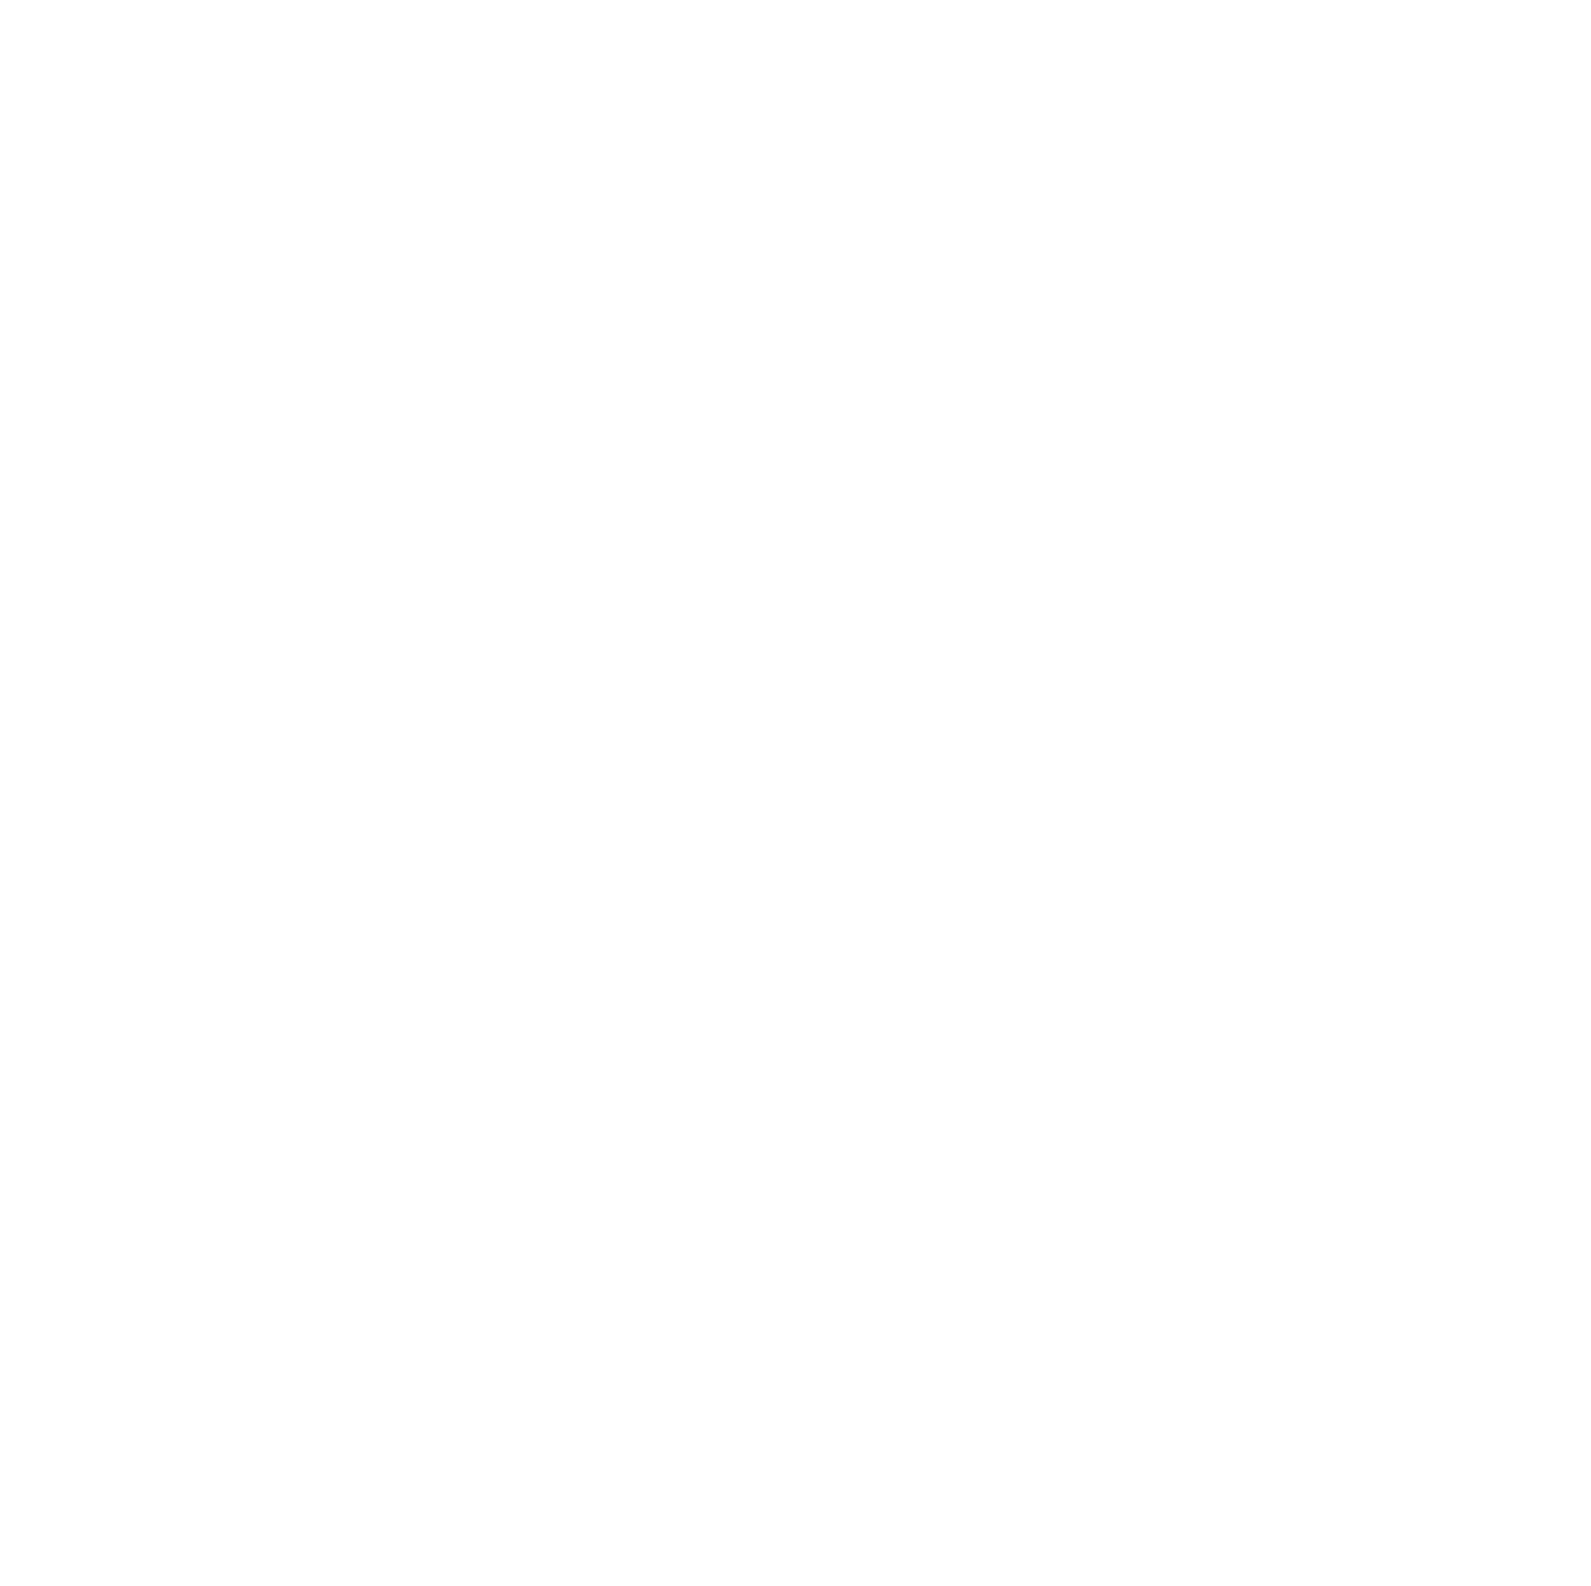 Grupo Financiero Inbursa logo for dark backgrounds (transparent PNG)